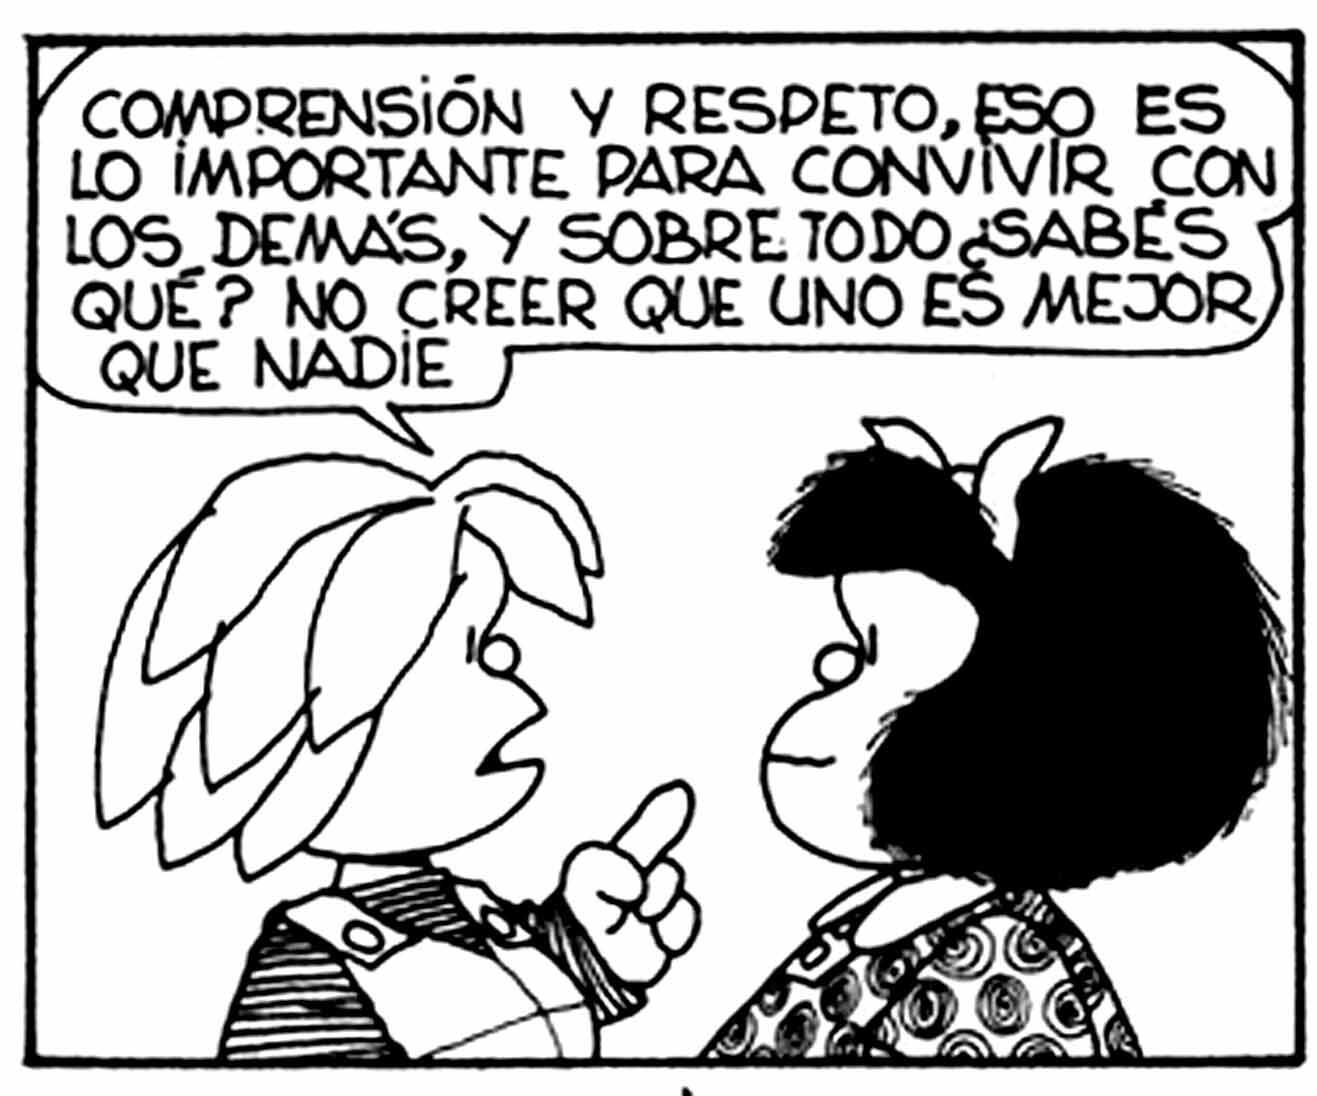 Sustentator on X: "#Mafalda #frases #respeto #tolerancia  http://t.co/jtRnl9jCjt" / X